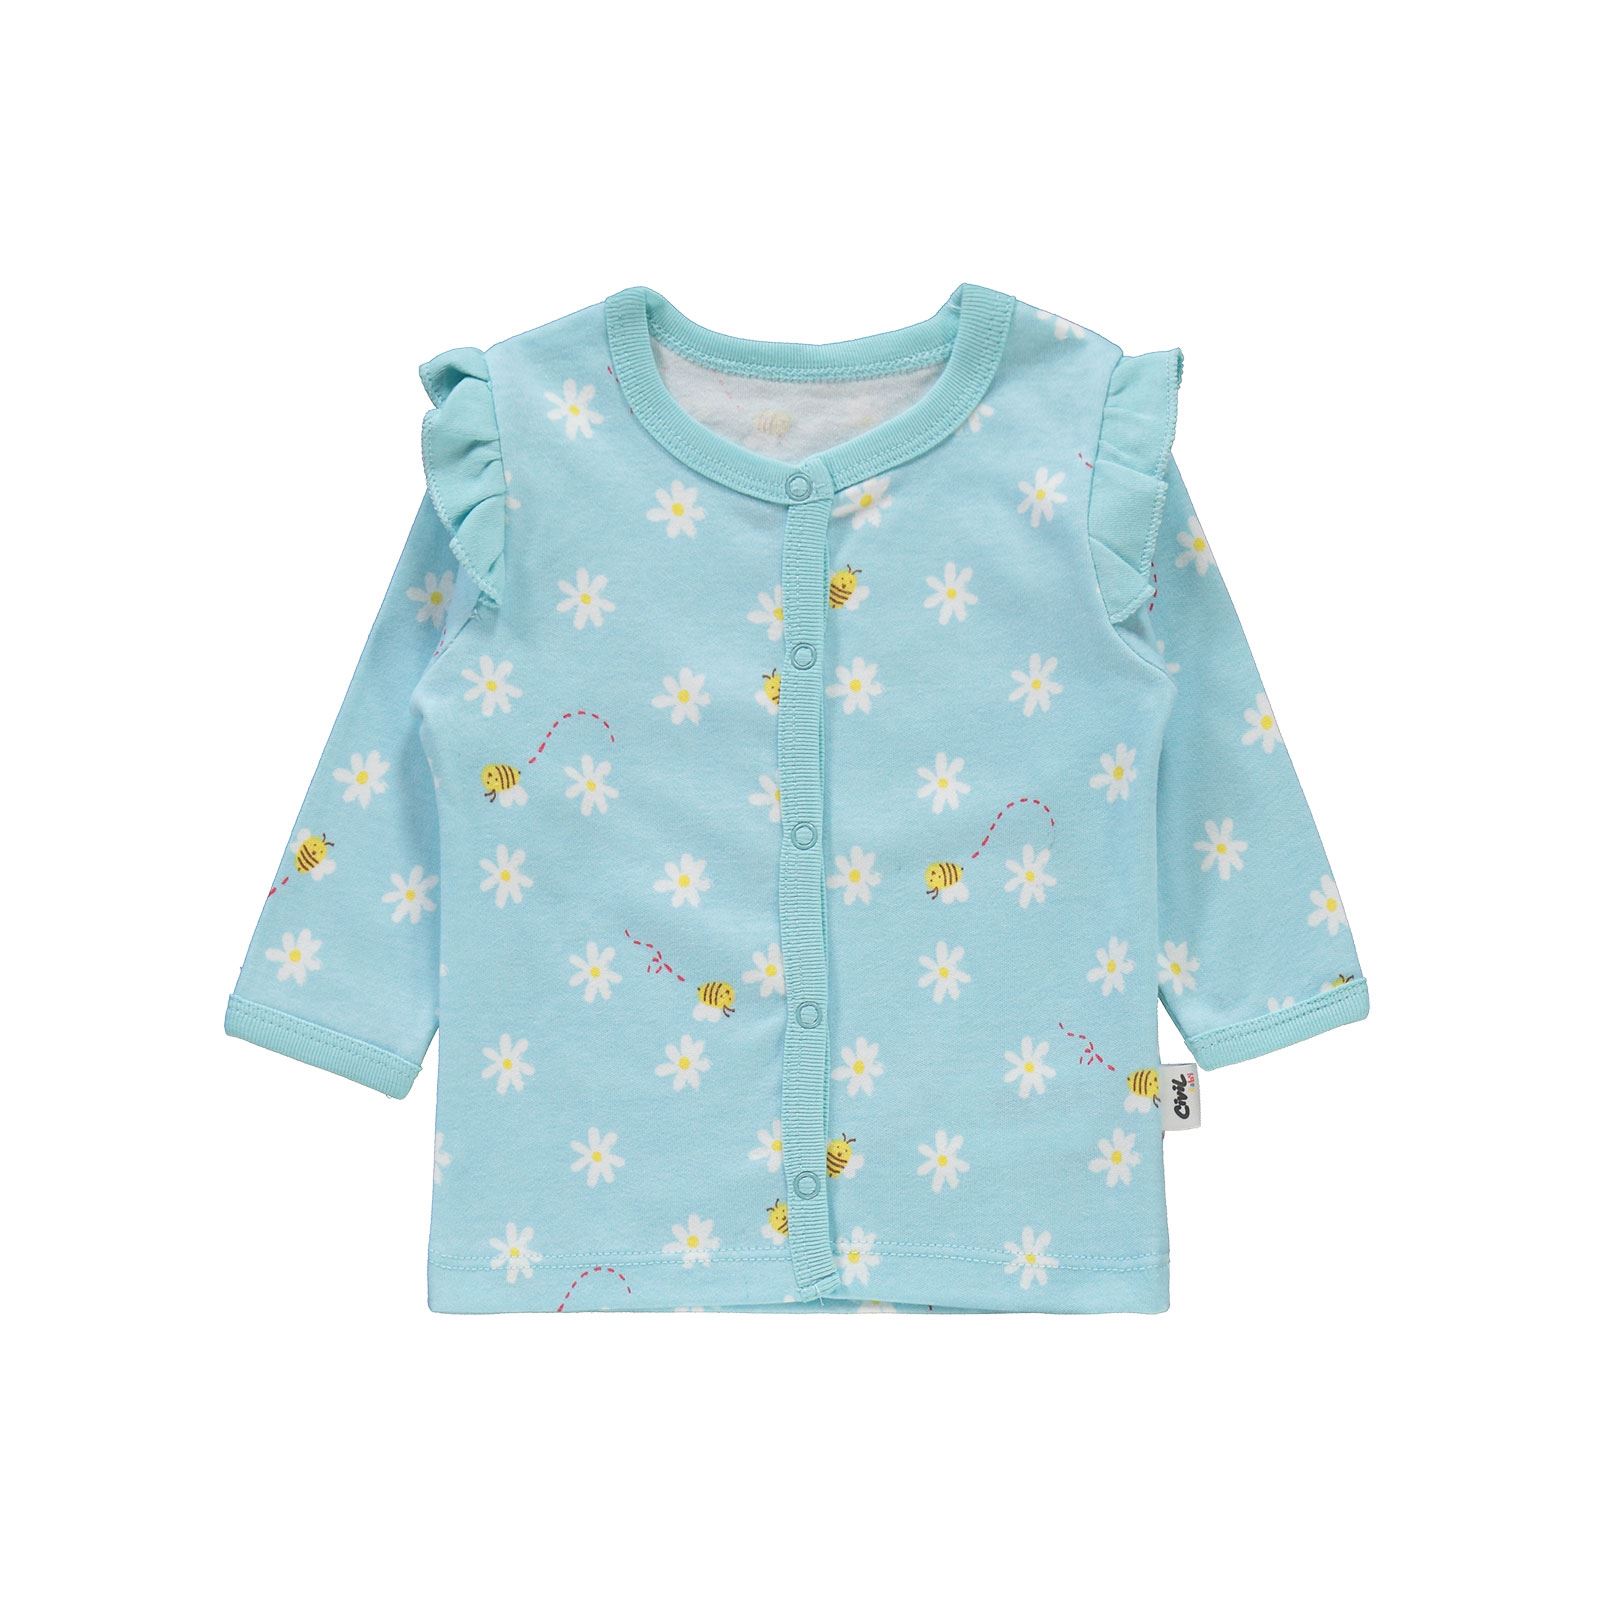 Civil Baby Kız Bebek Pijama Takımı 1-9 Ay Nil Yeşili